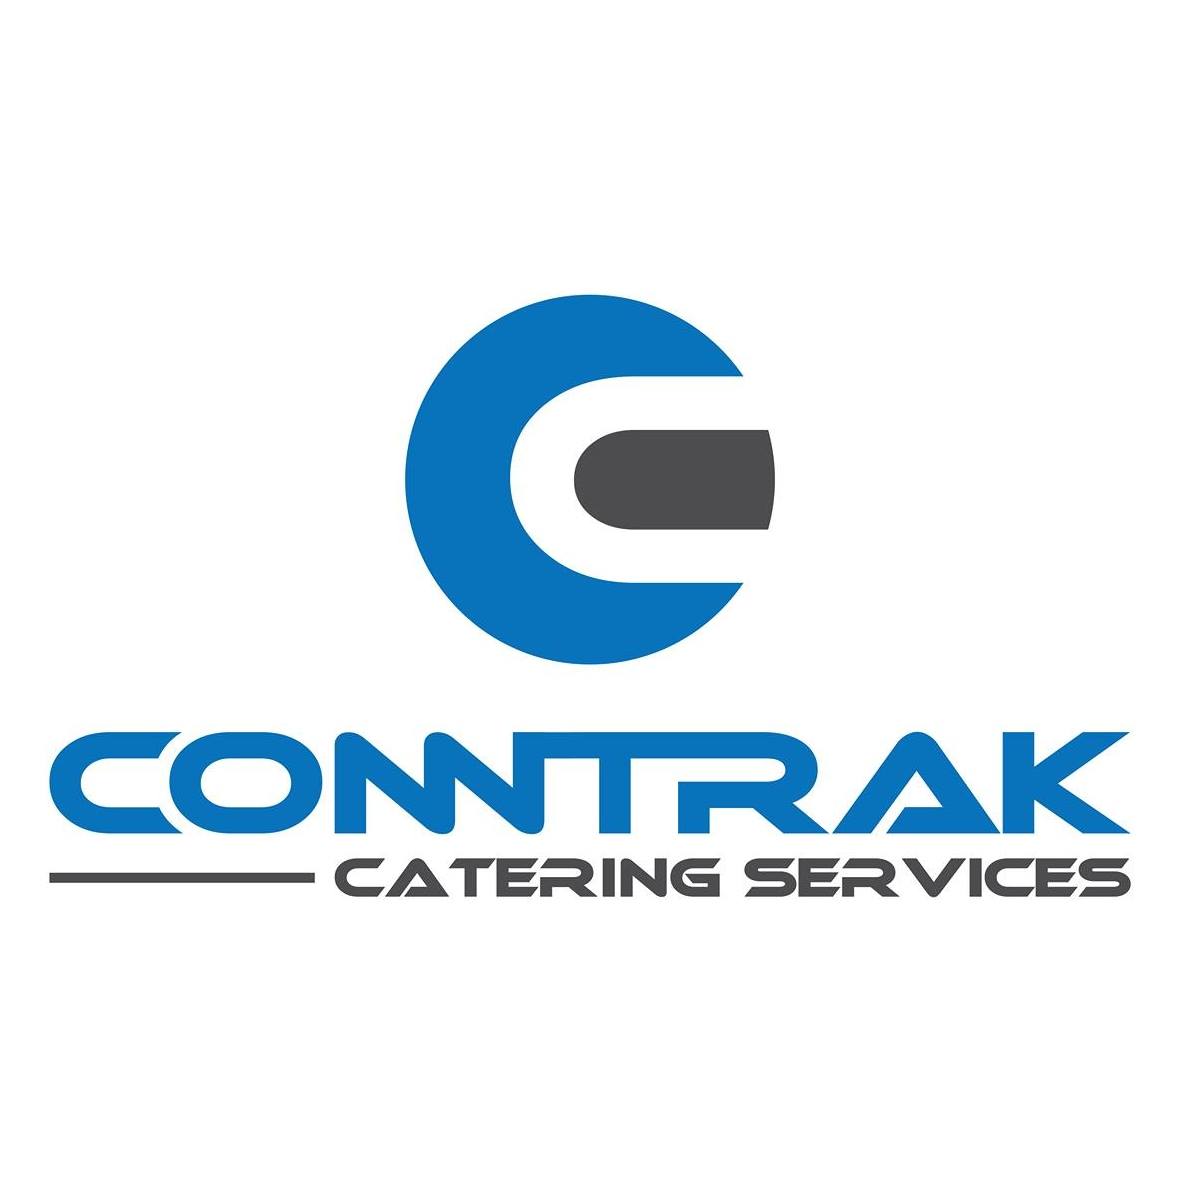 Conntrak Catering (Thailand) Co., Ltd